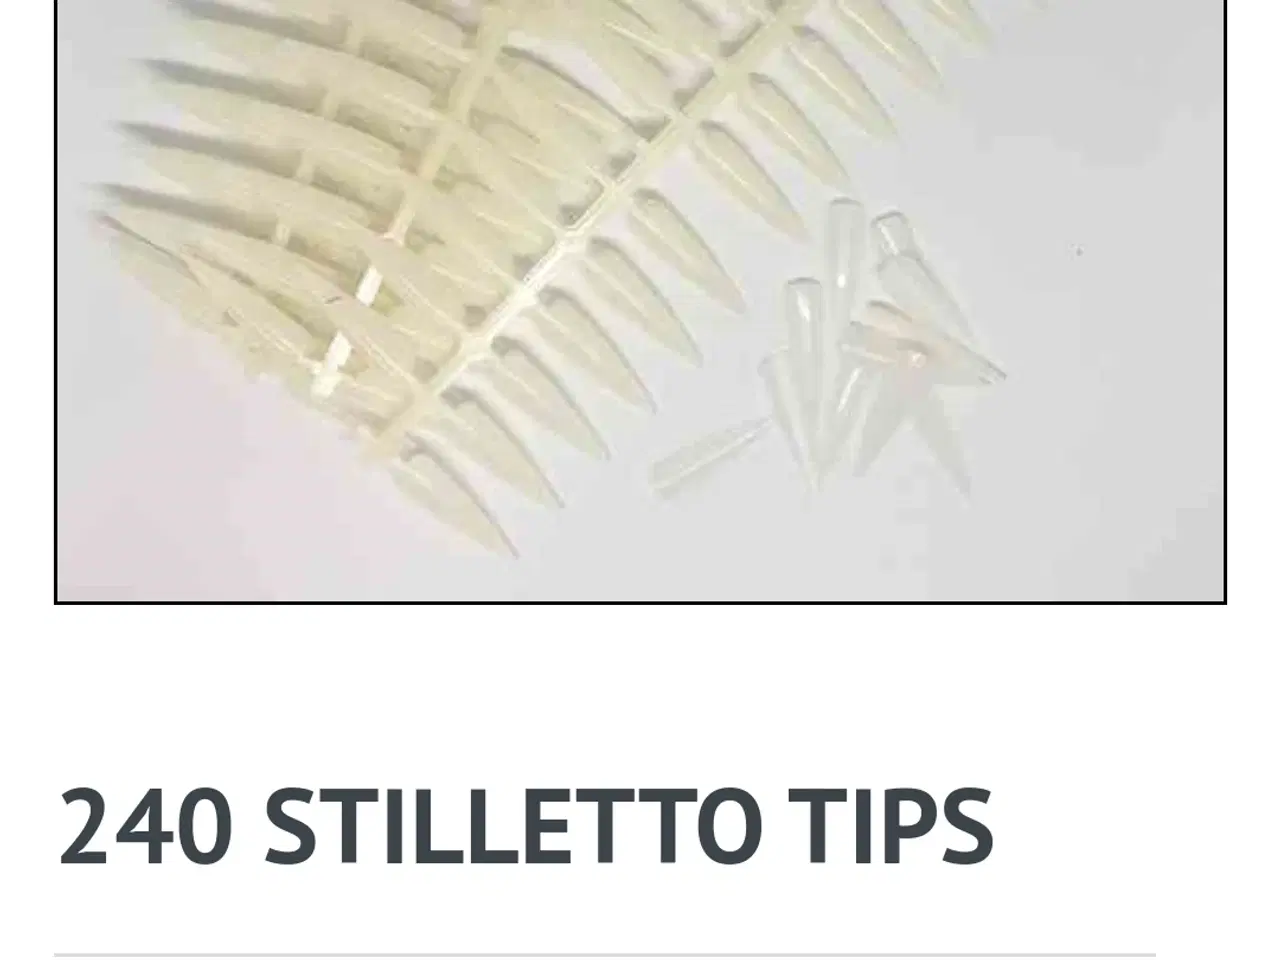 Billede 3 - Stiletto negle tipper